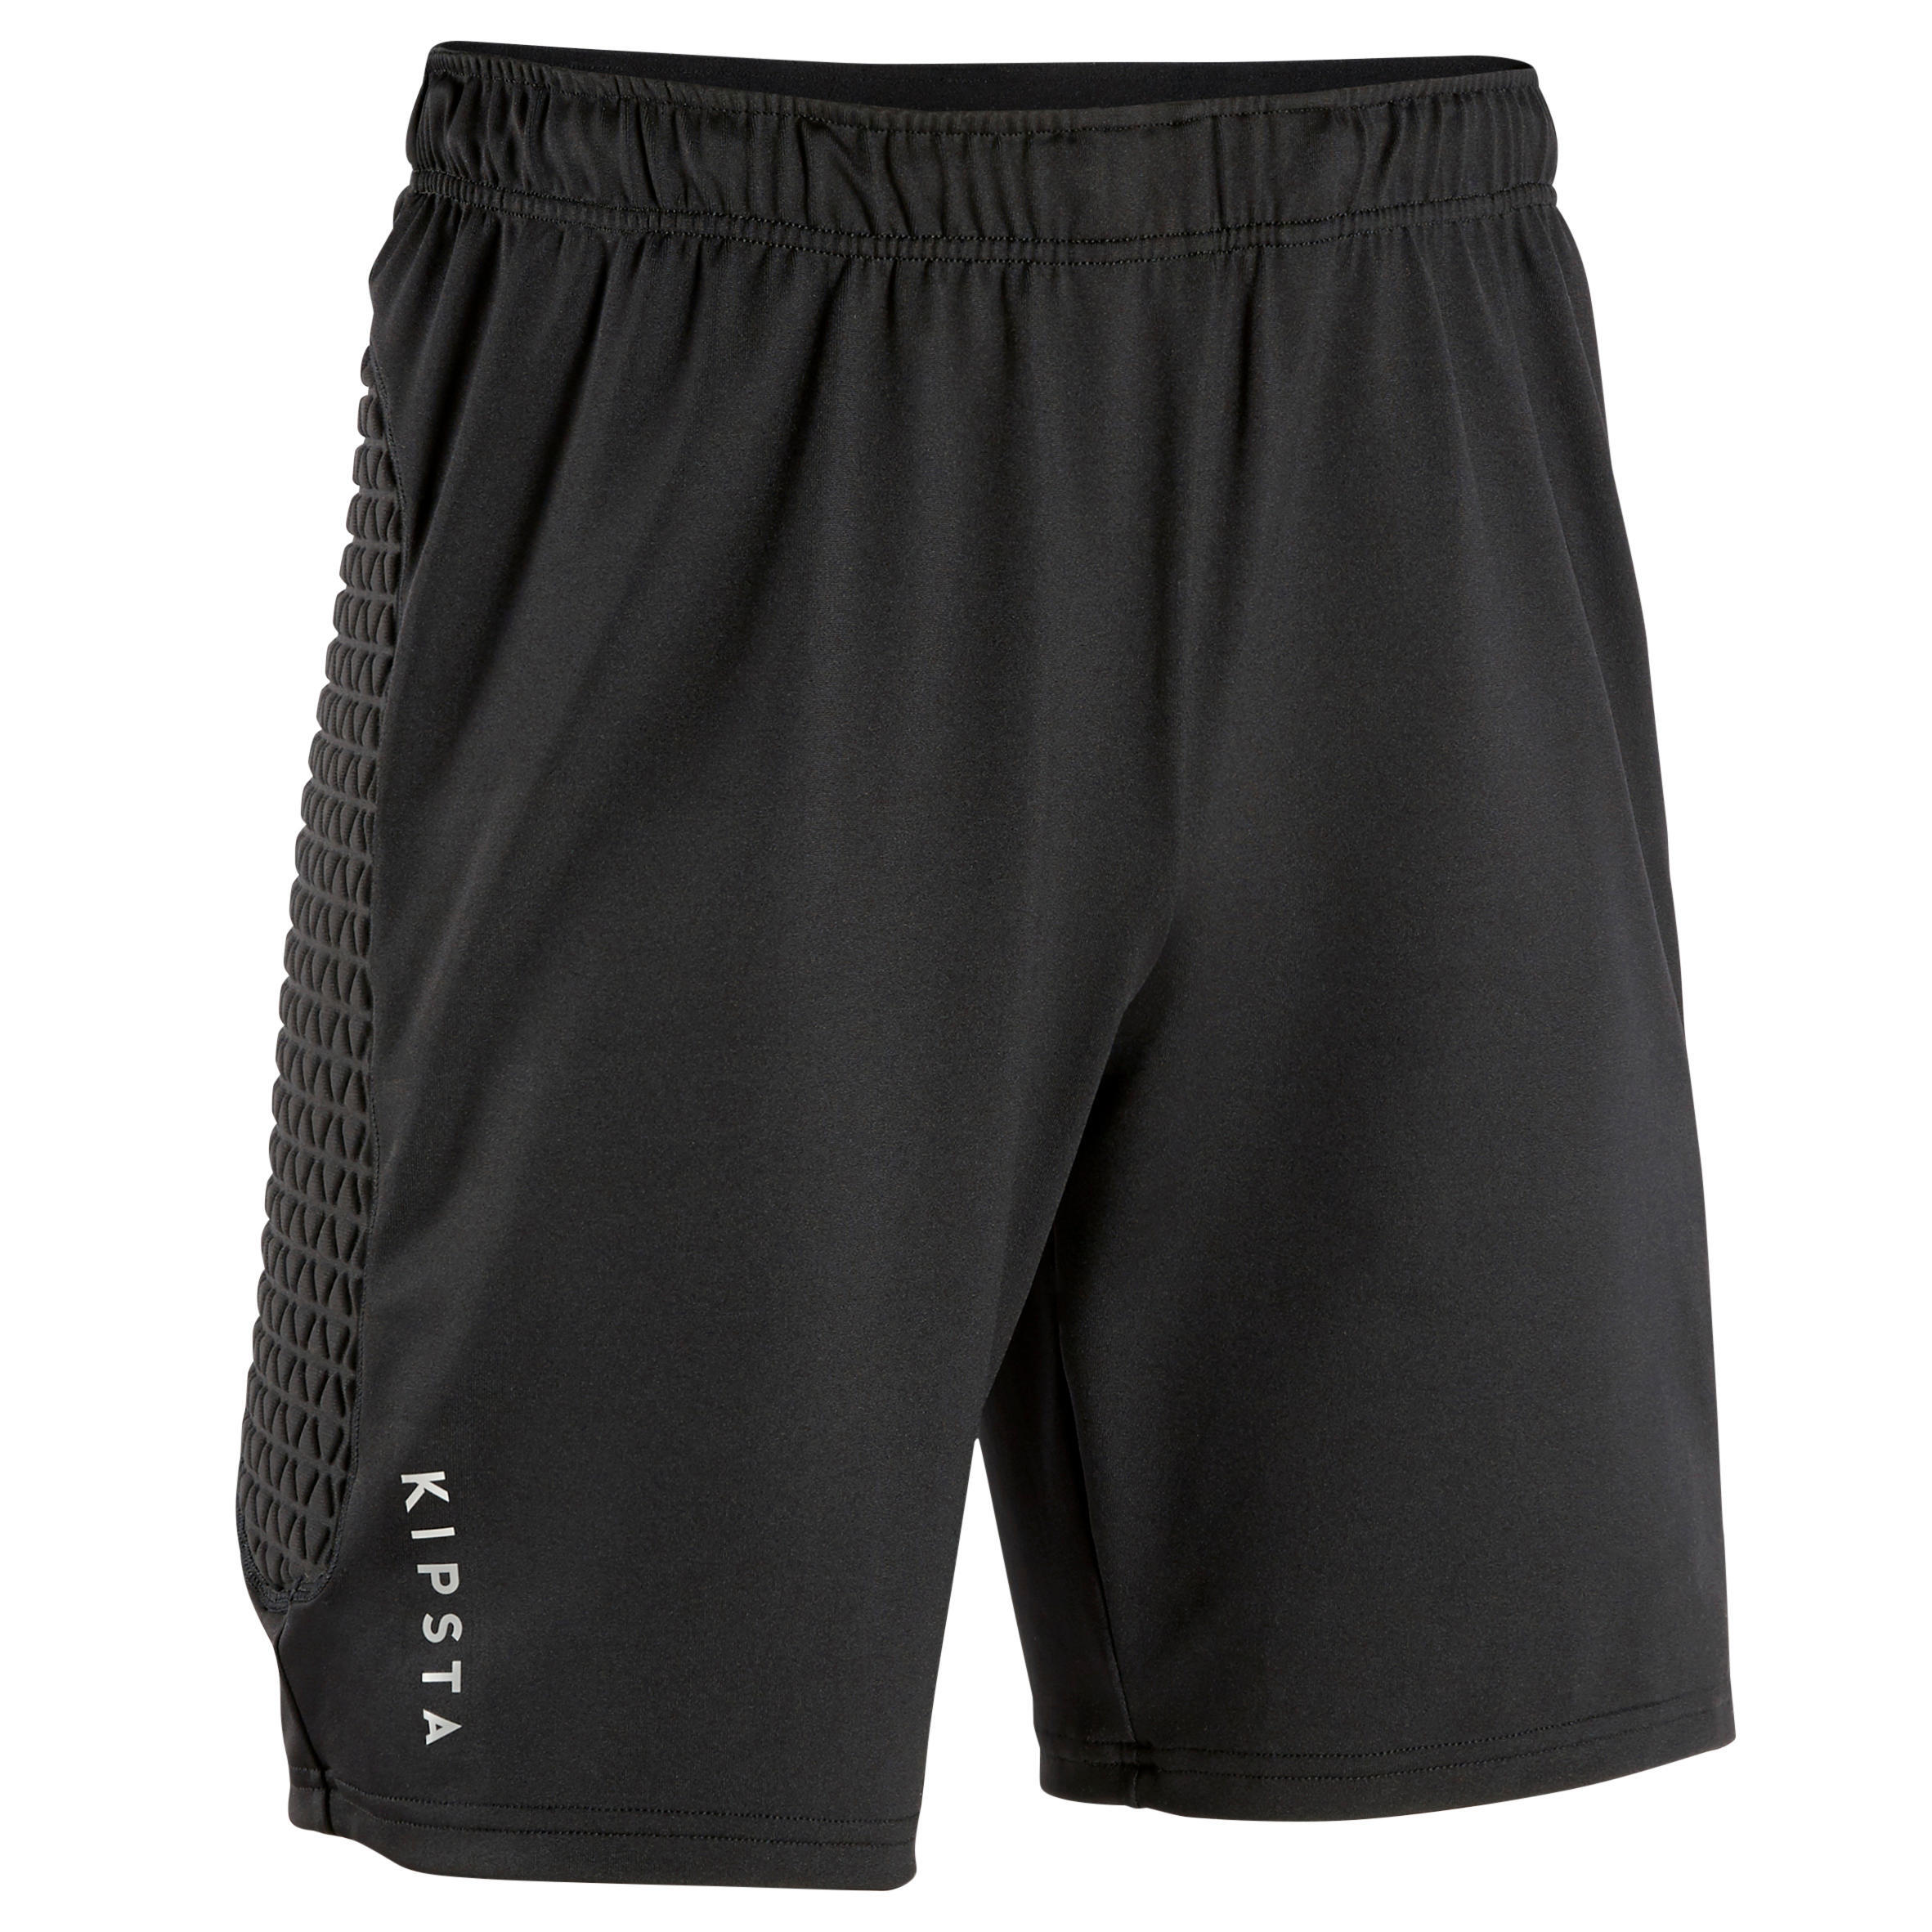 KIPSTA Adult Goalkeeper Shorts F500 - Black